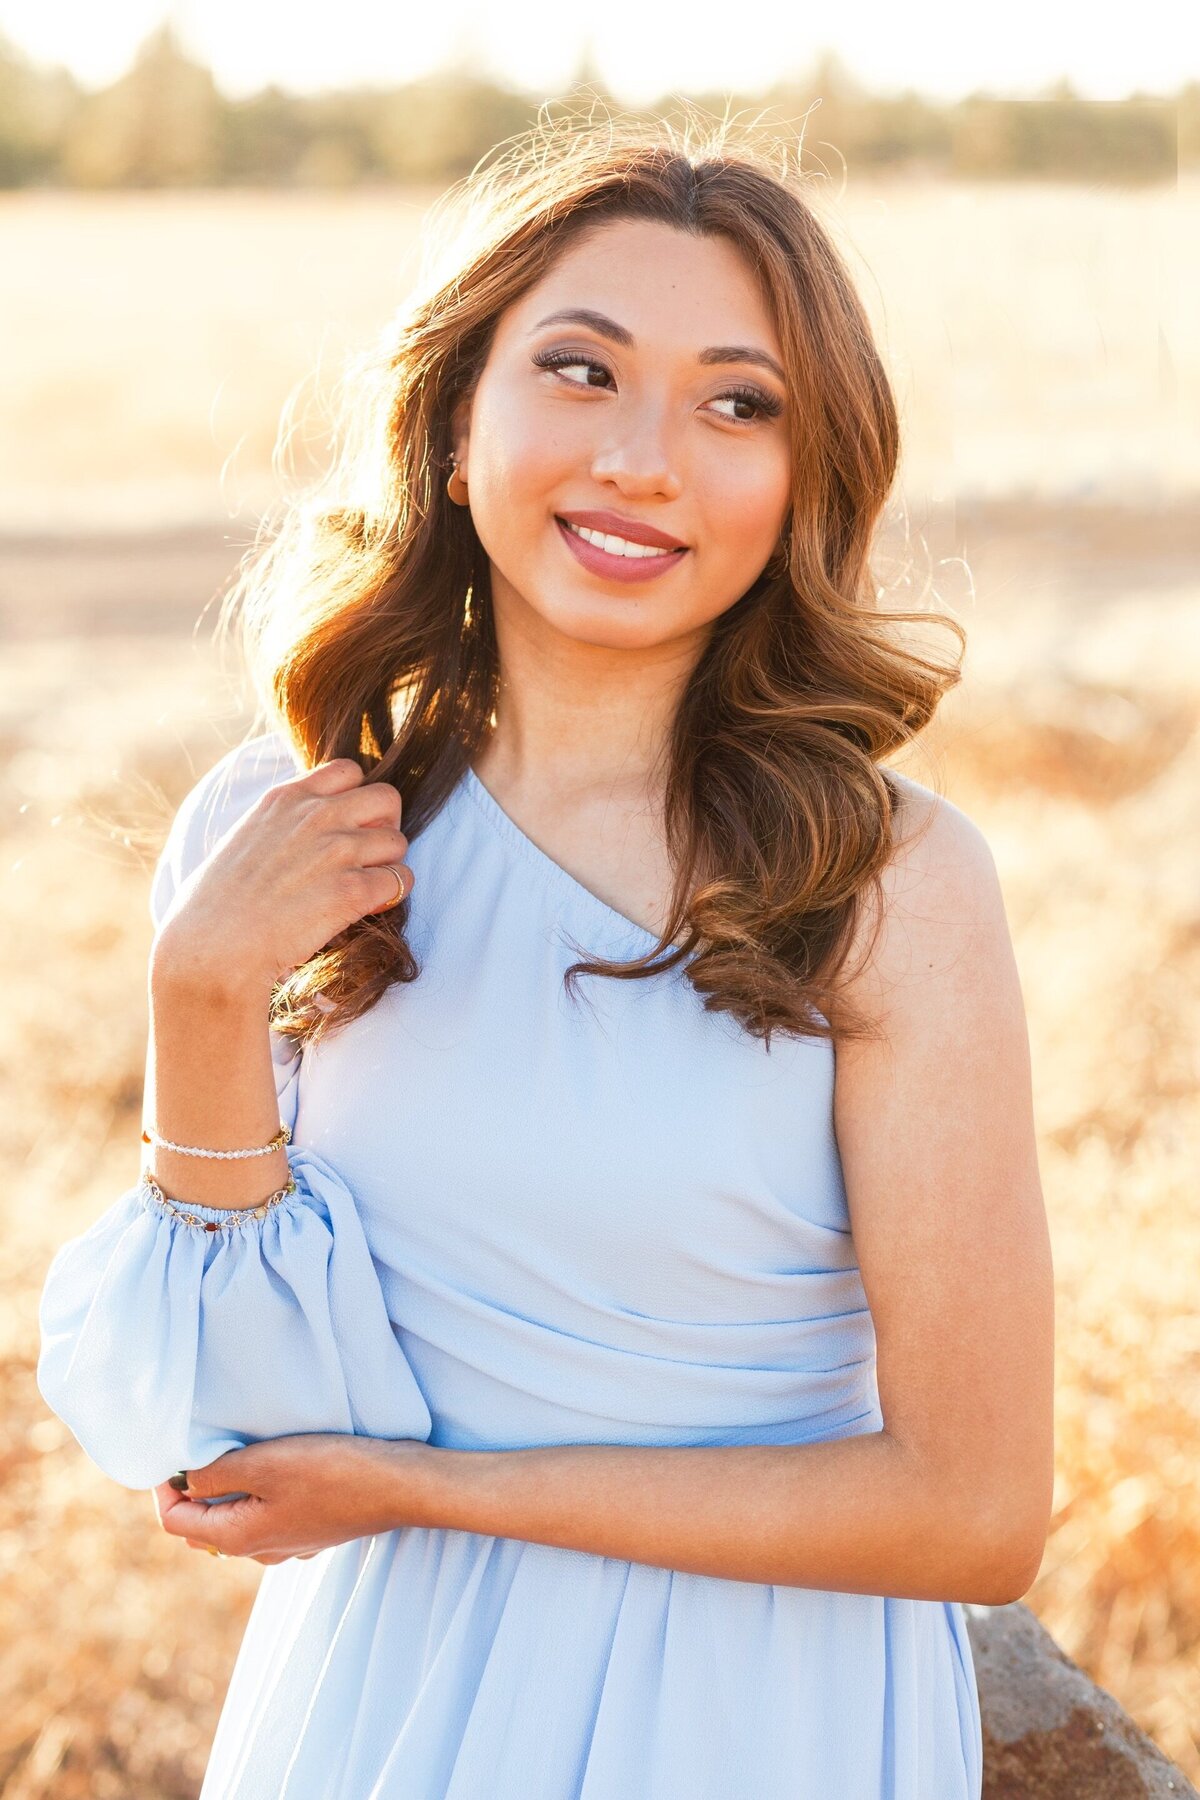 Senior Graduation Portrait Photography - Flagstaff, Arizona - Bayley Jordan Photography